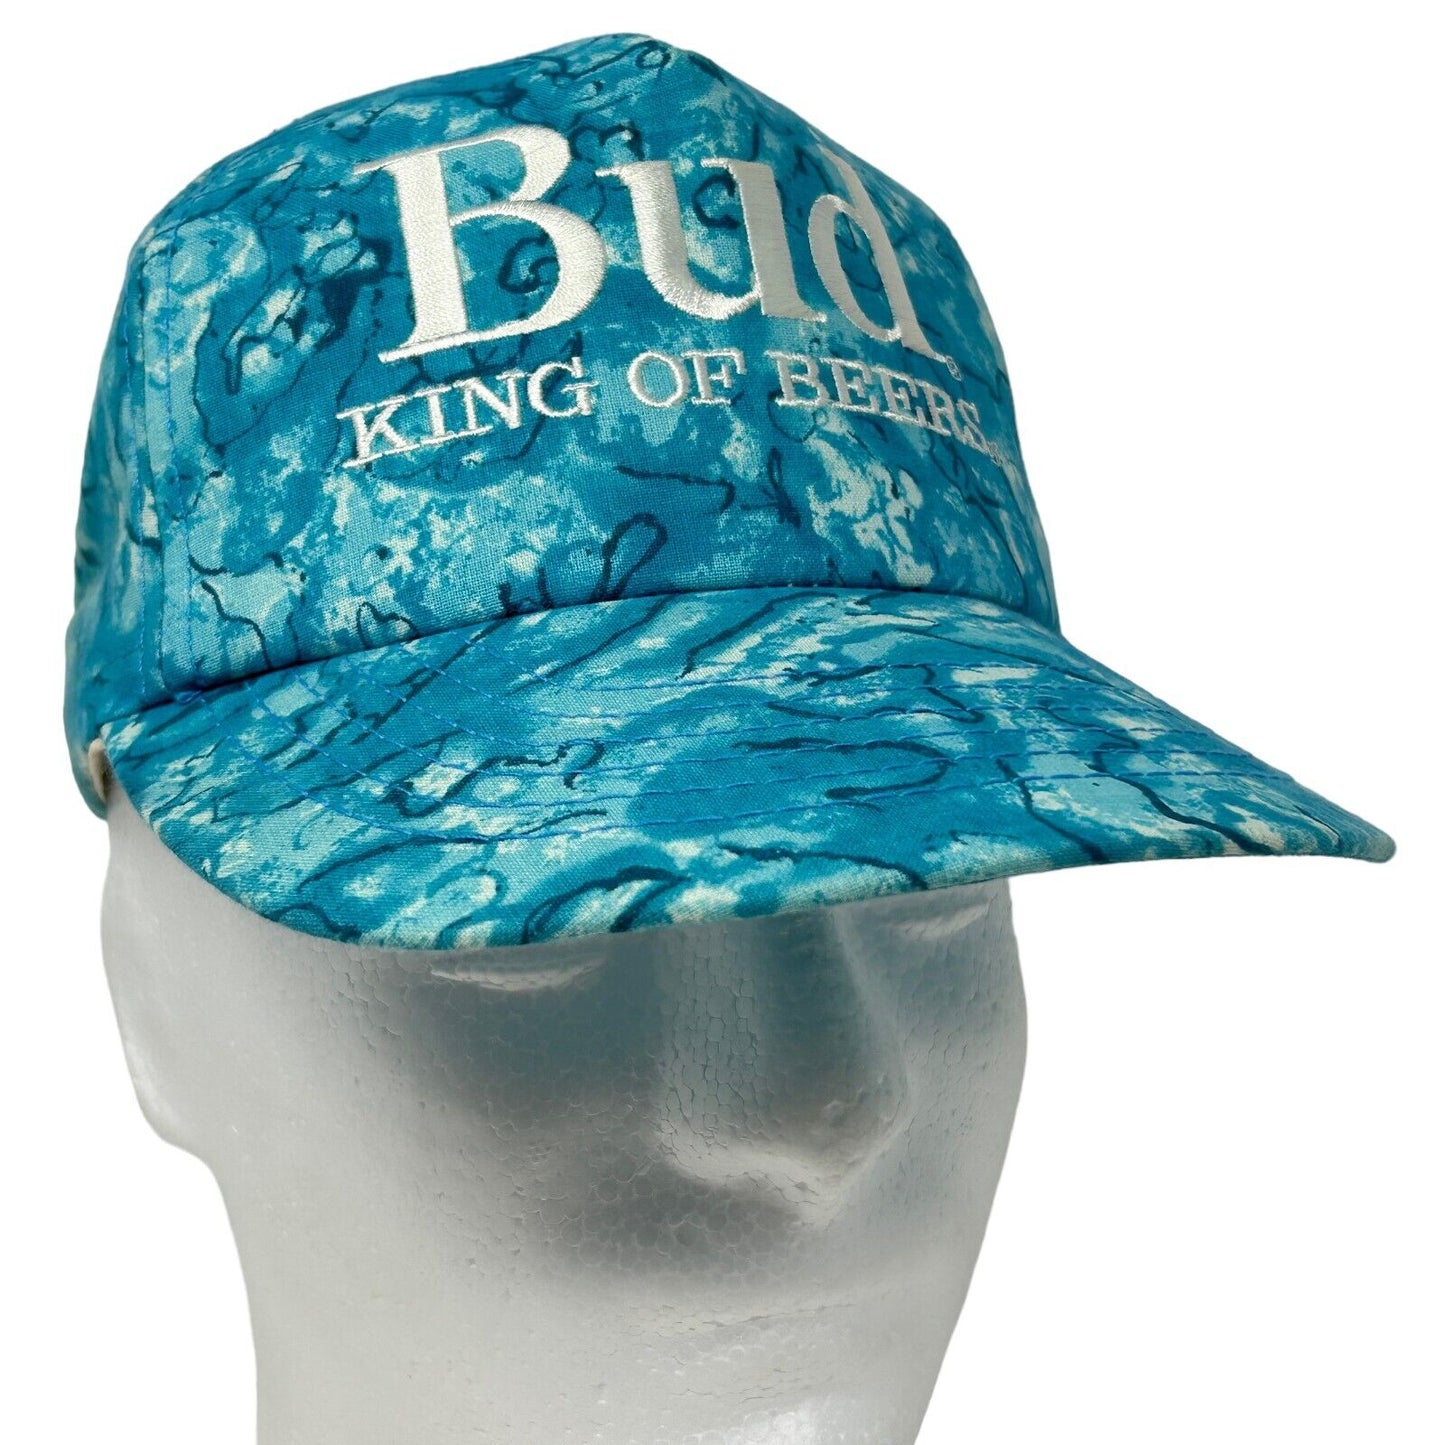 Bud King of Beers Snapback Hat Vintage 90s Blue Budweiser USA Made Baseball Cap